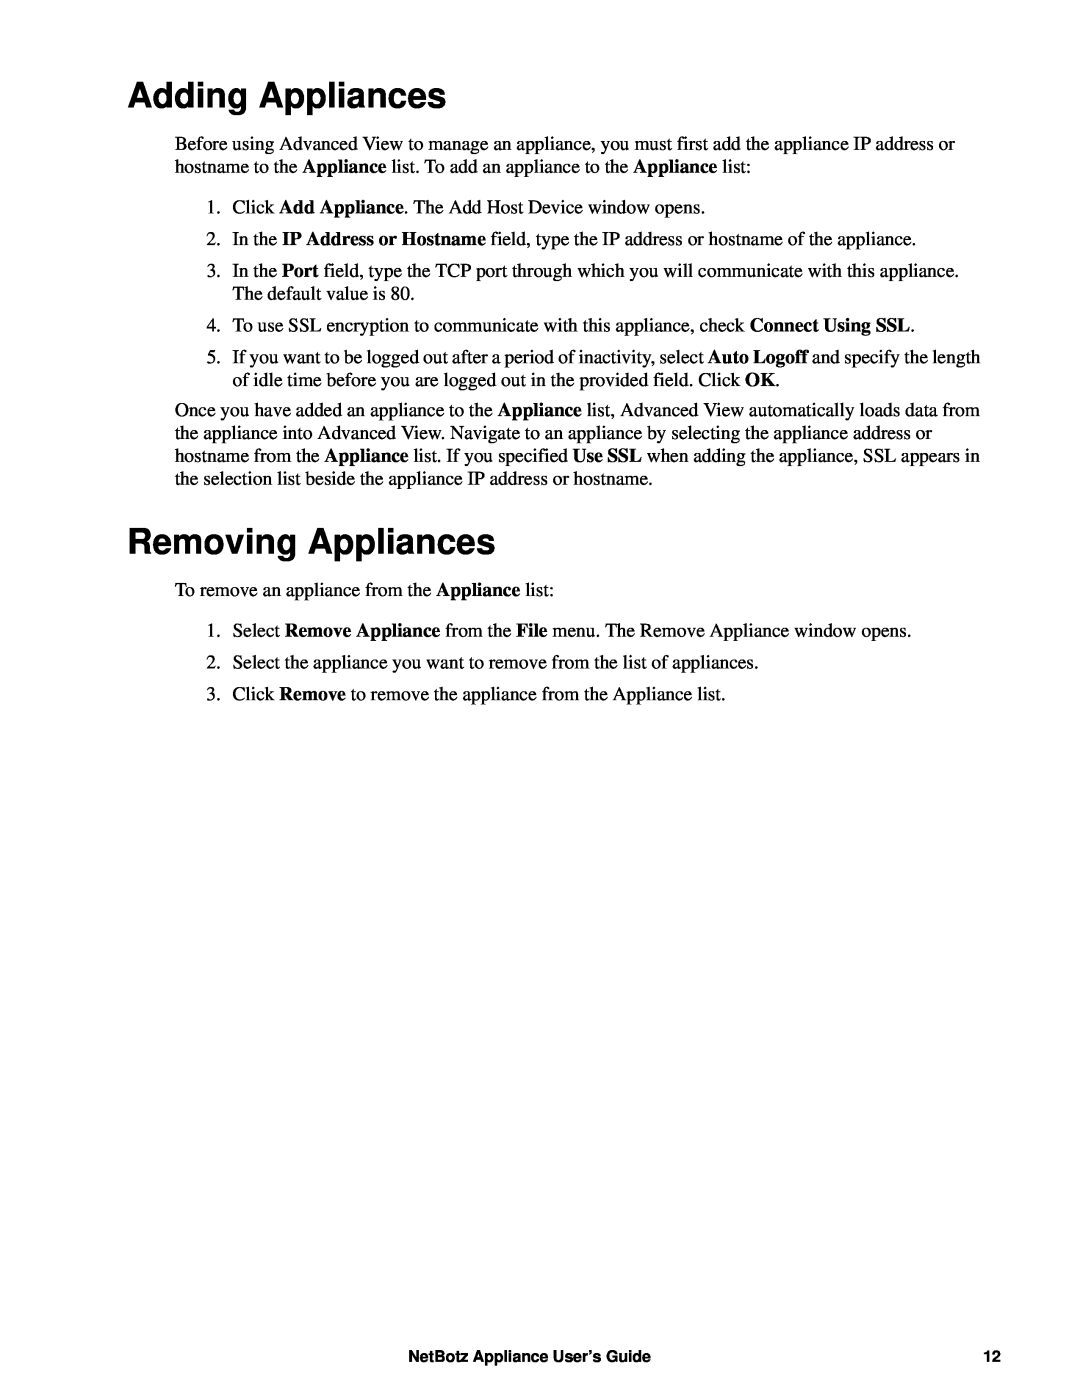 APC NBRK0450, NBRK0550, NBRK0570 manual Adding Appliances, Removing Appliances 